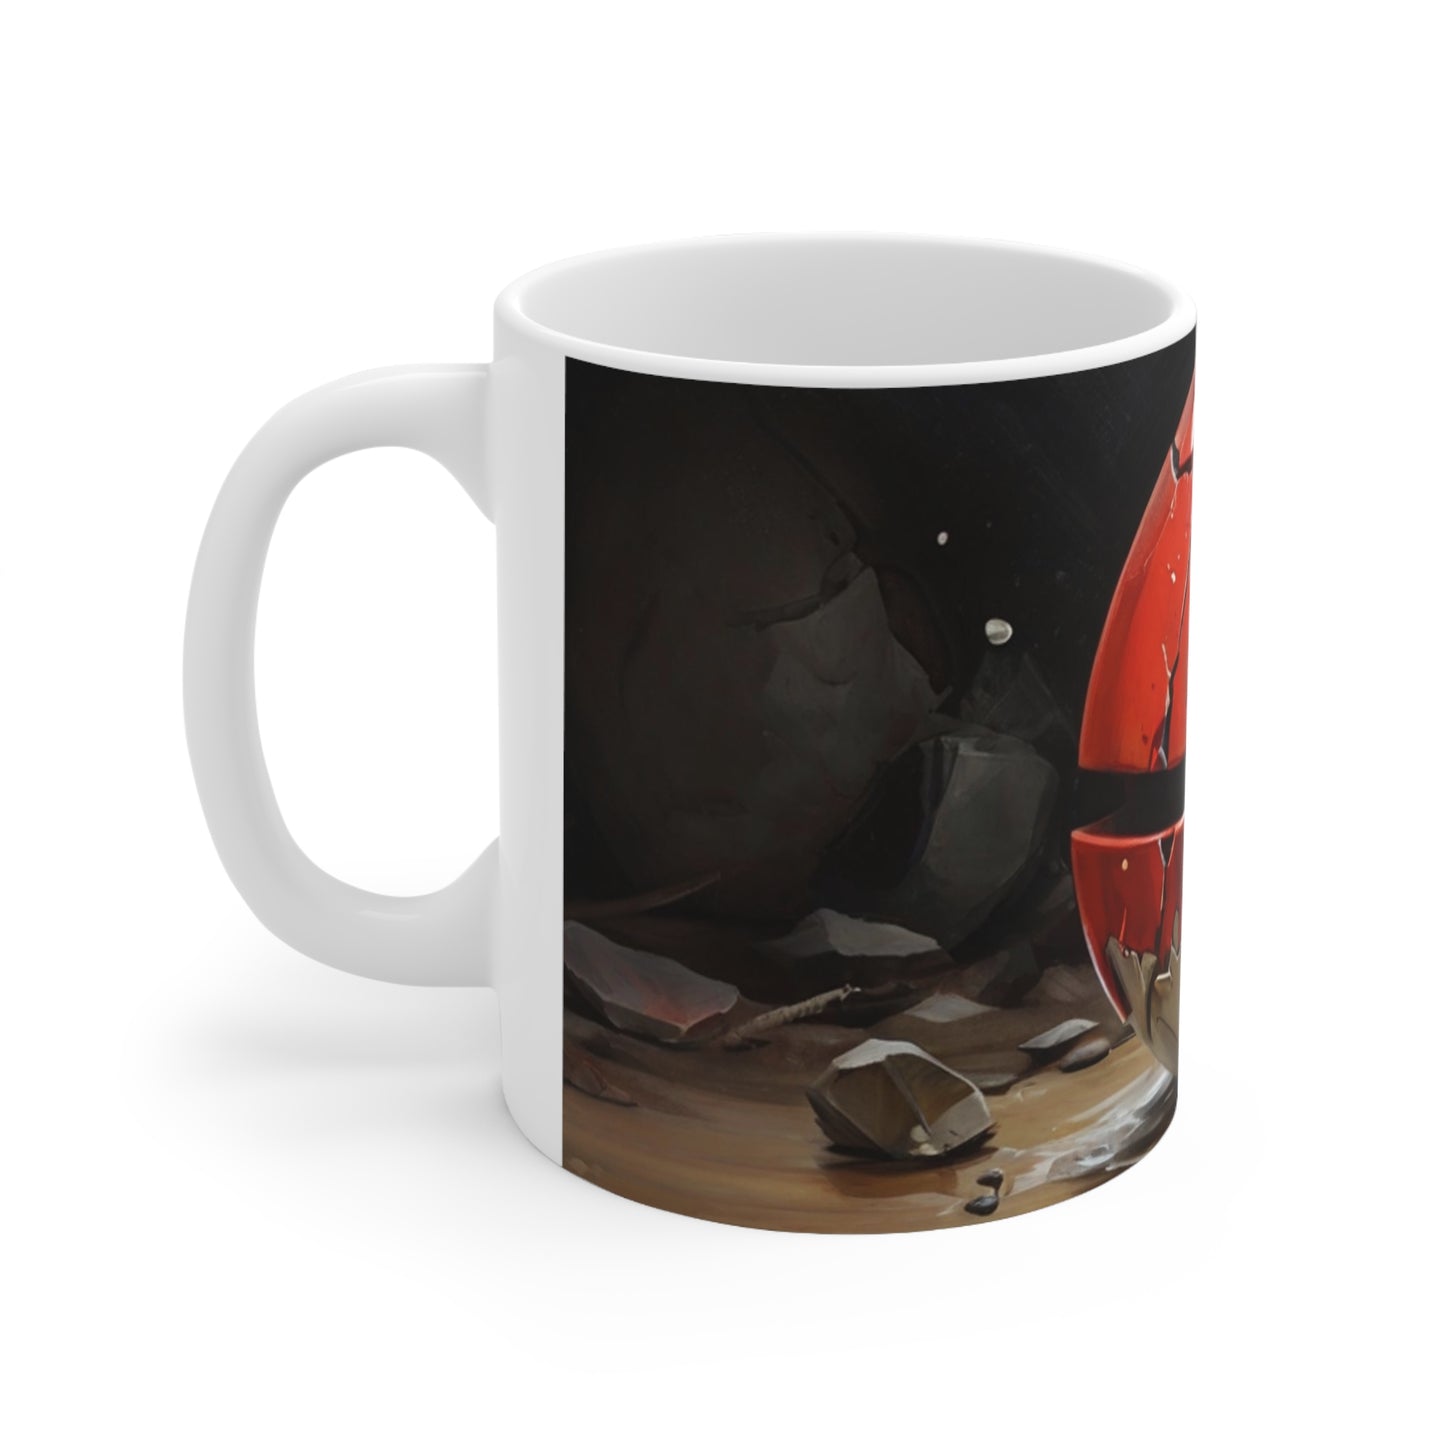 Broken Shattered Poke-Ball Mug - Ceramic Coffee Mug 11oz